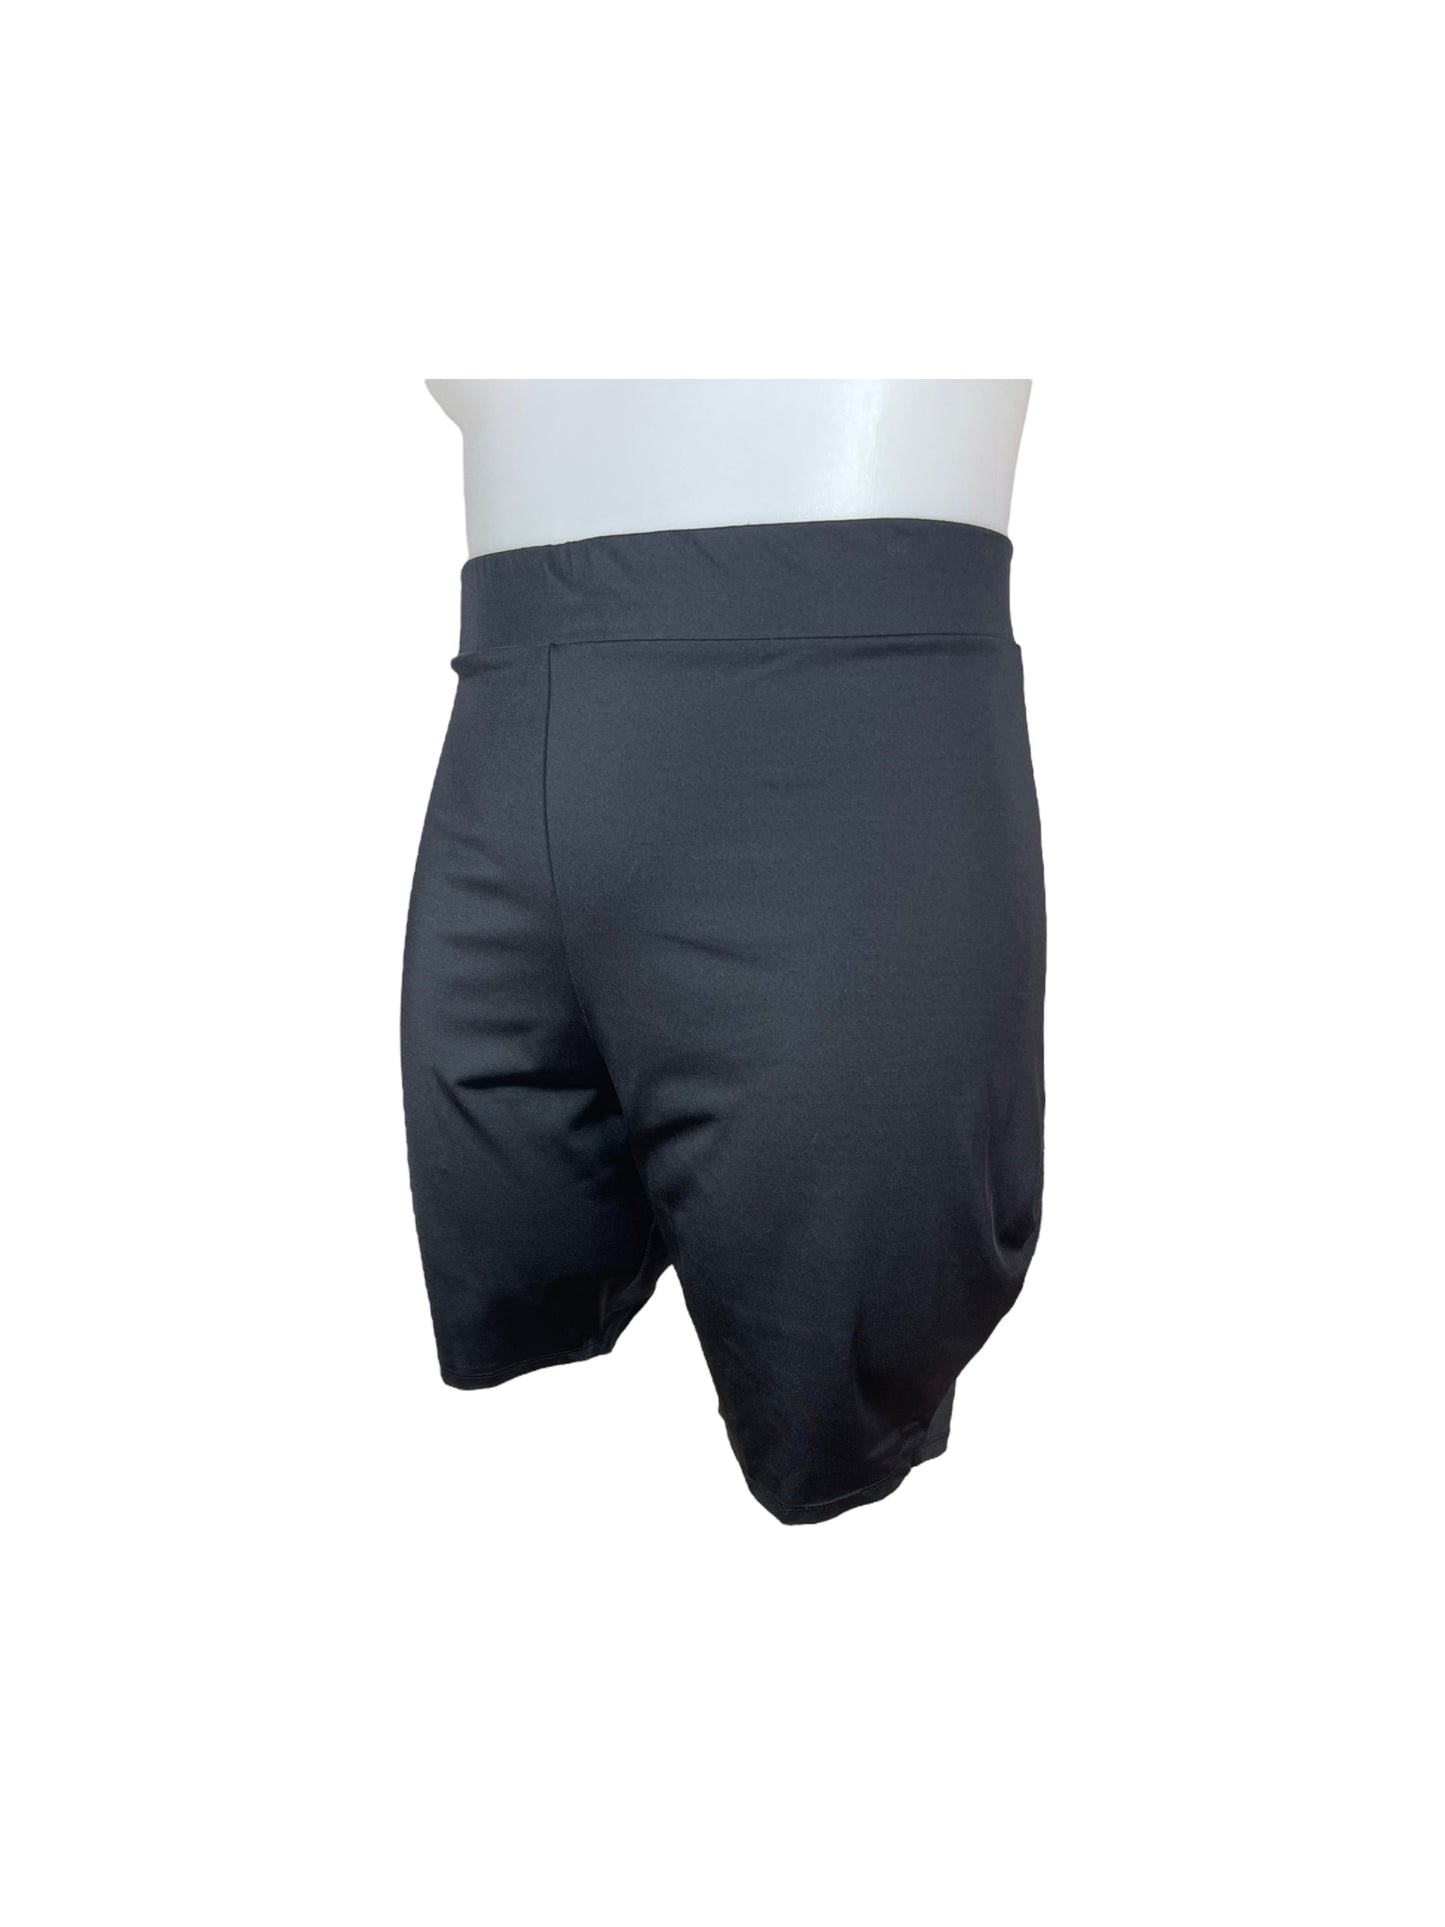 “Torrid” Shiny Black Legging Shorts (5)